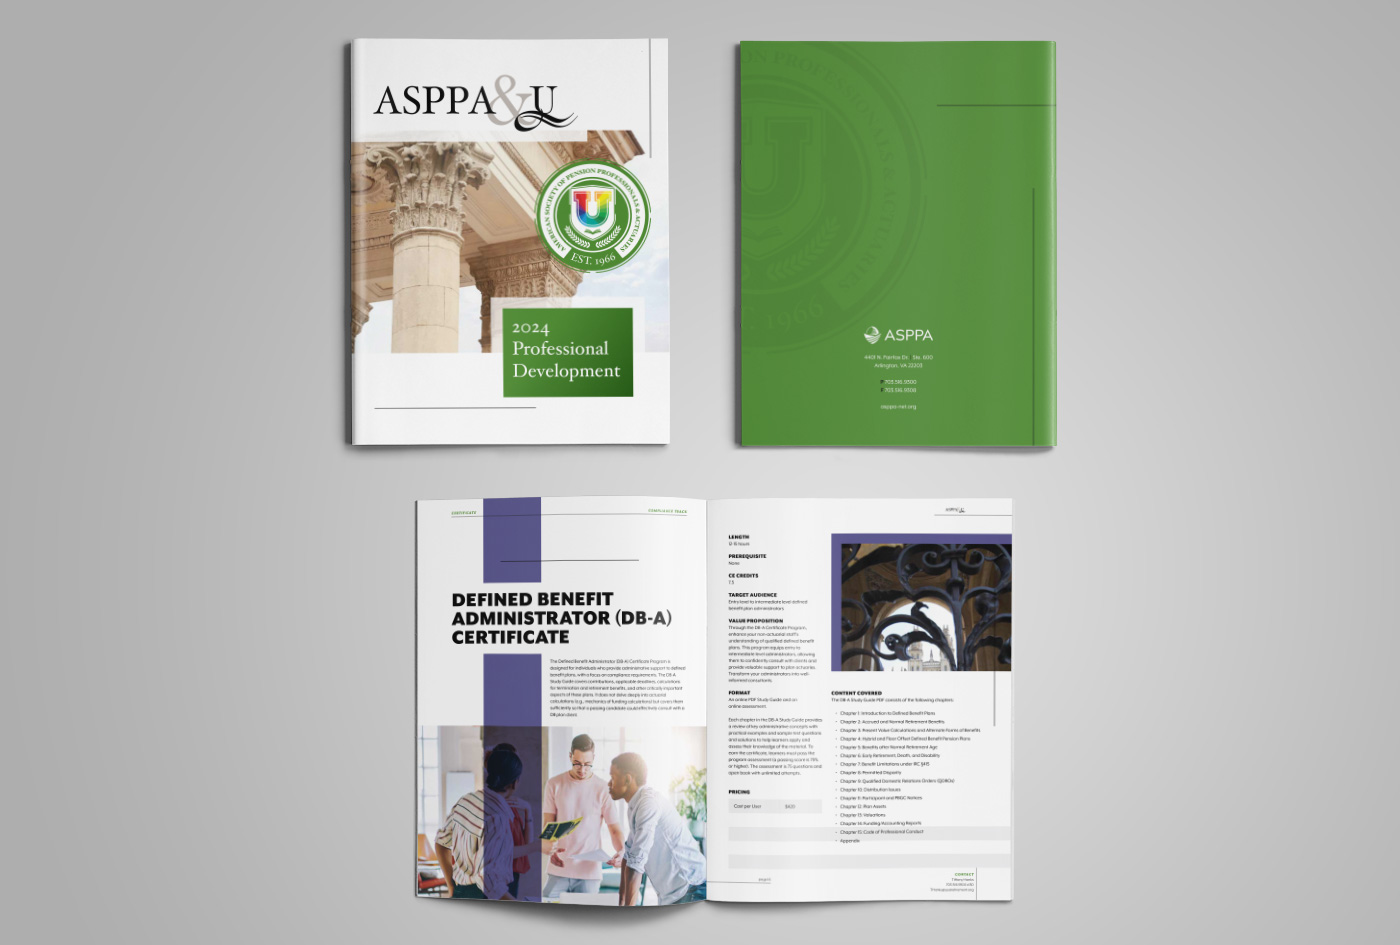 ASPPA&U 2024 Professional Development booklet